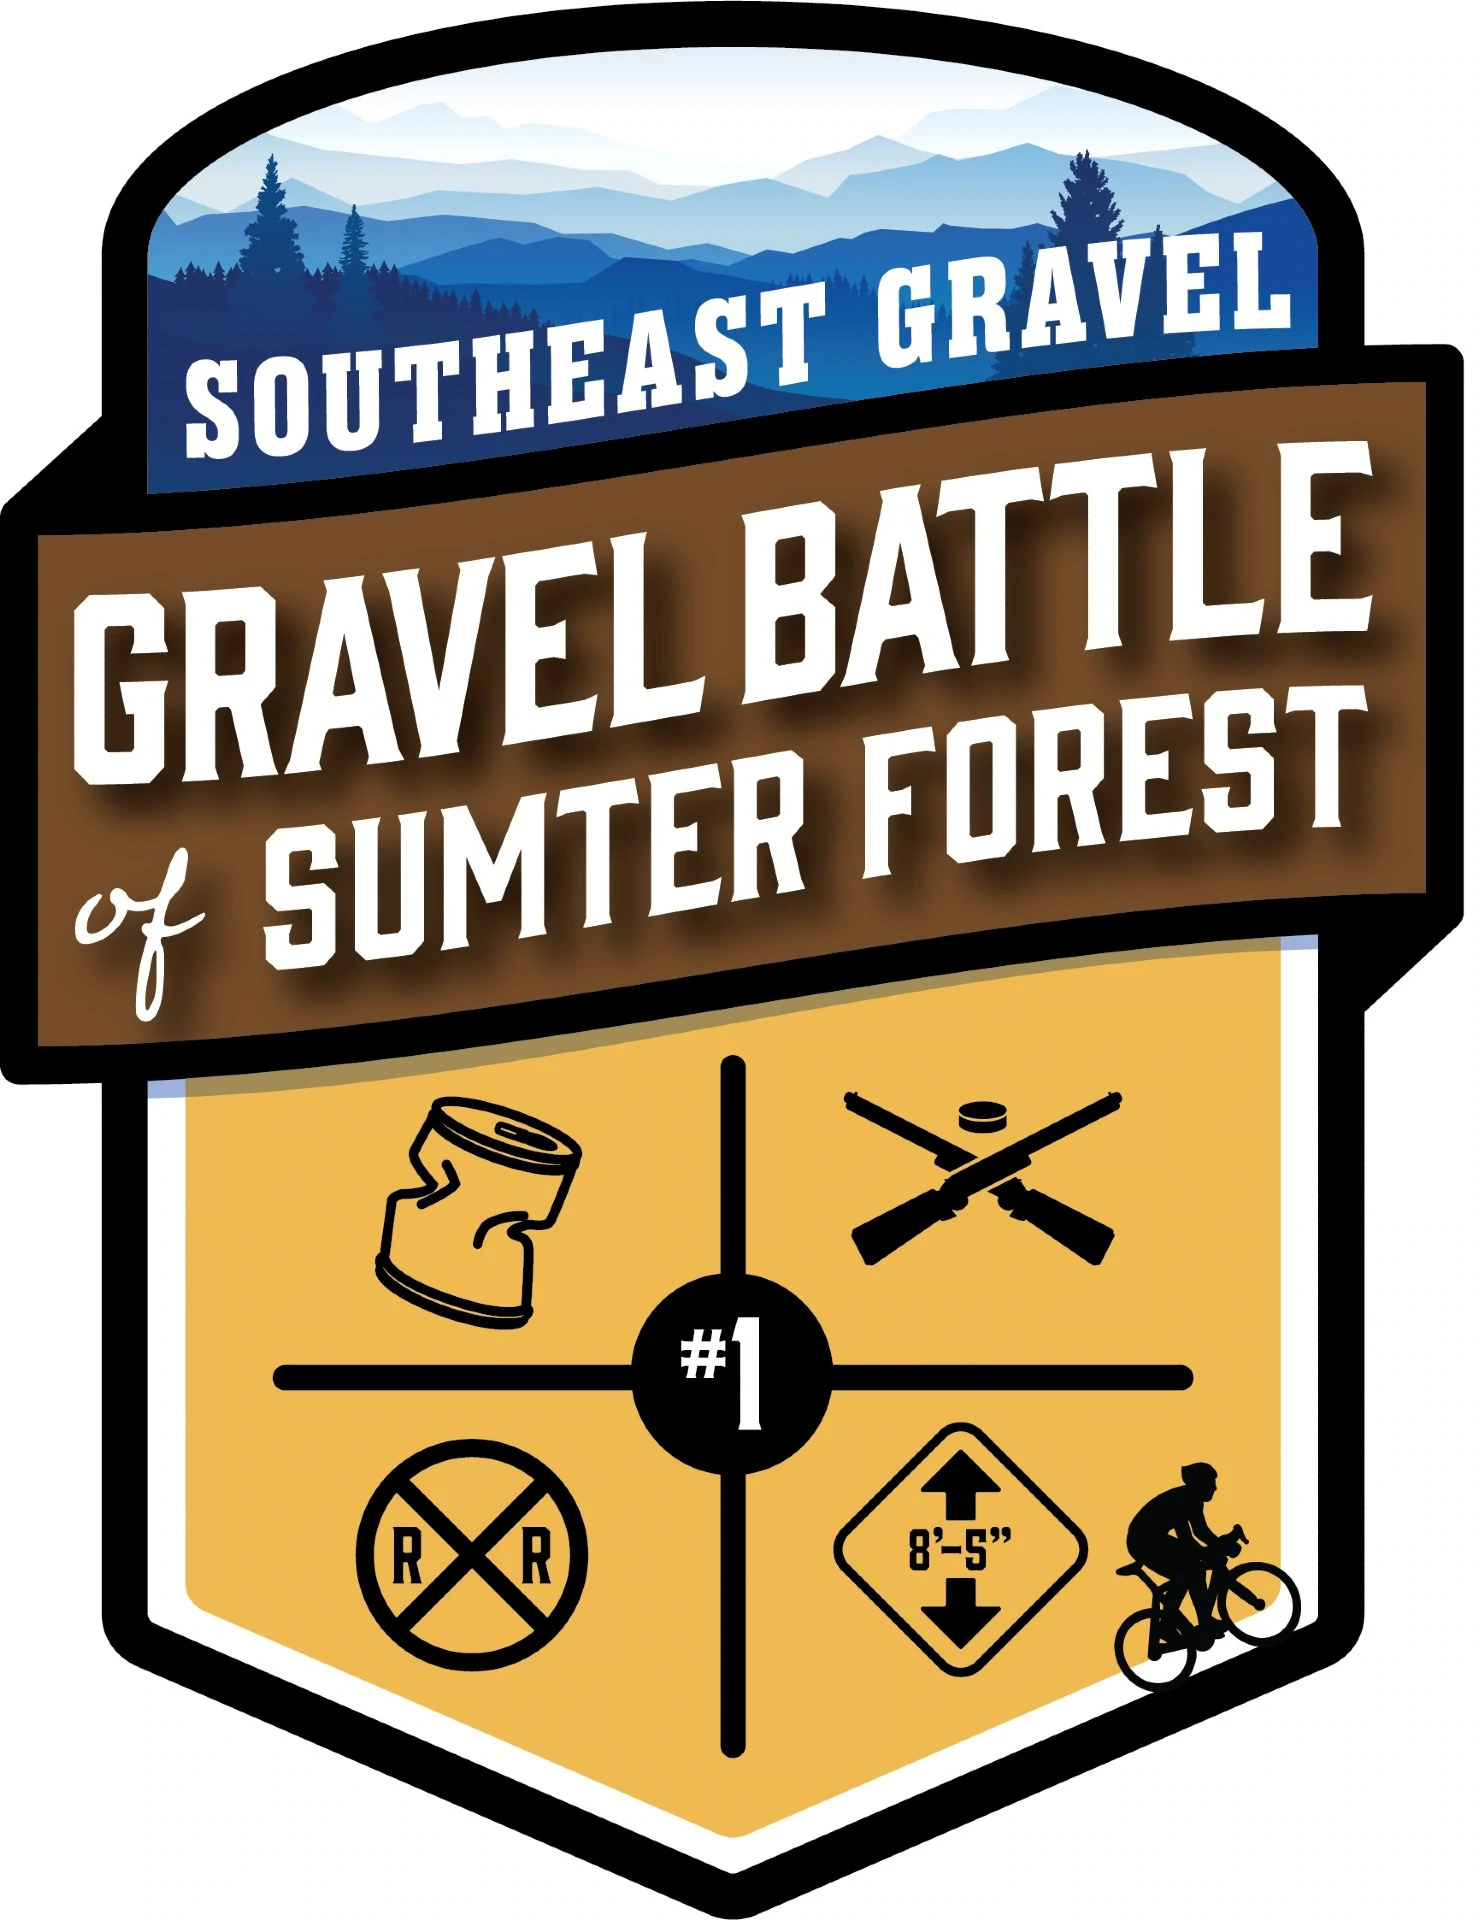 Gravel Battle of Sumter Forest